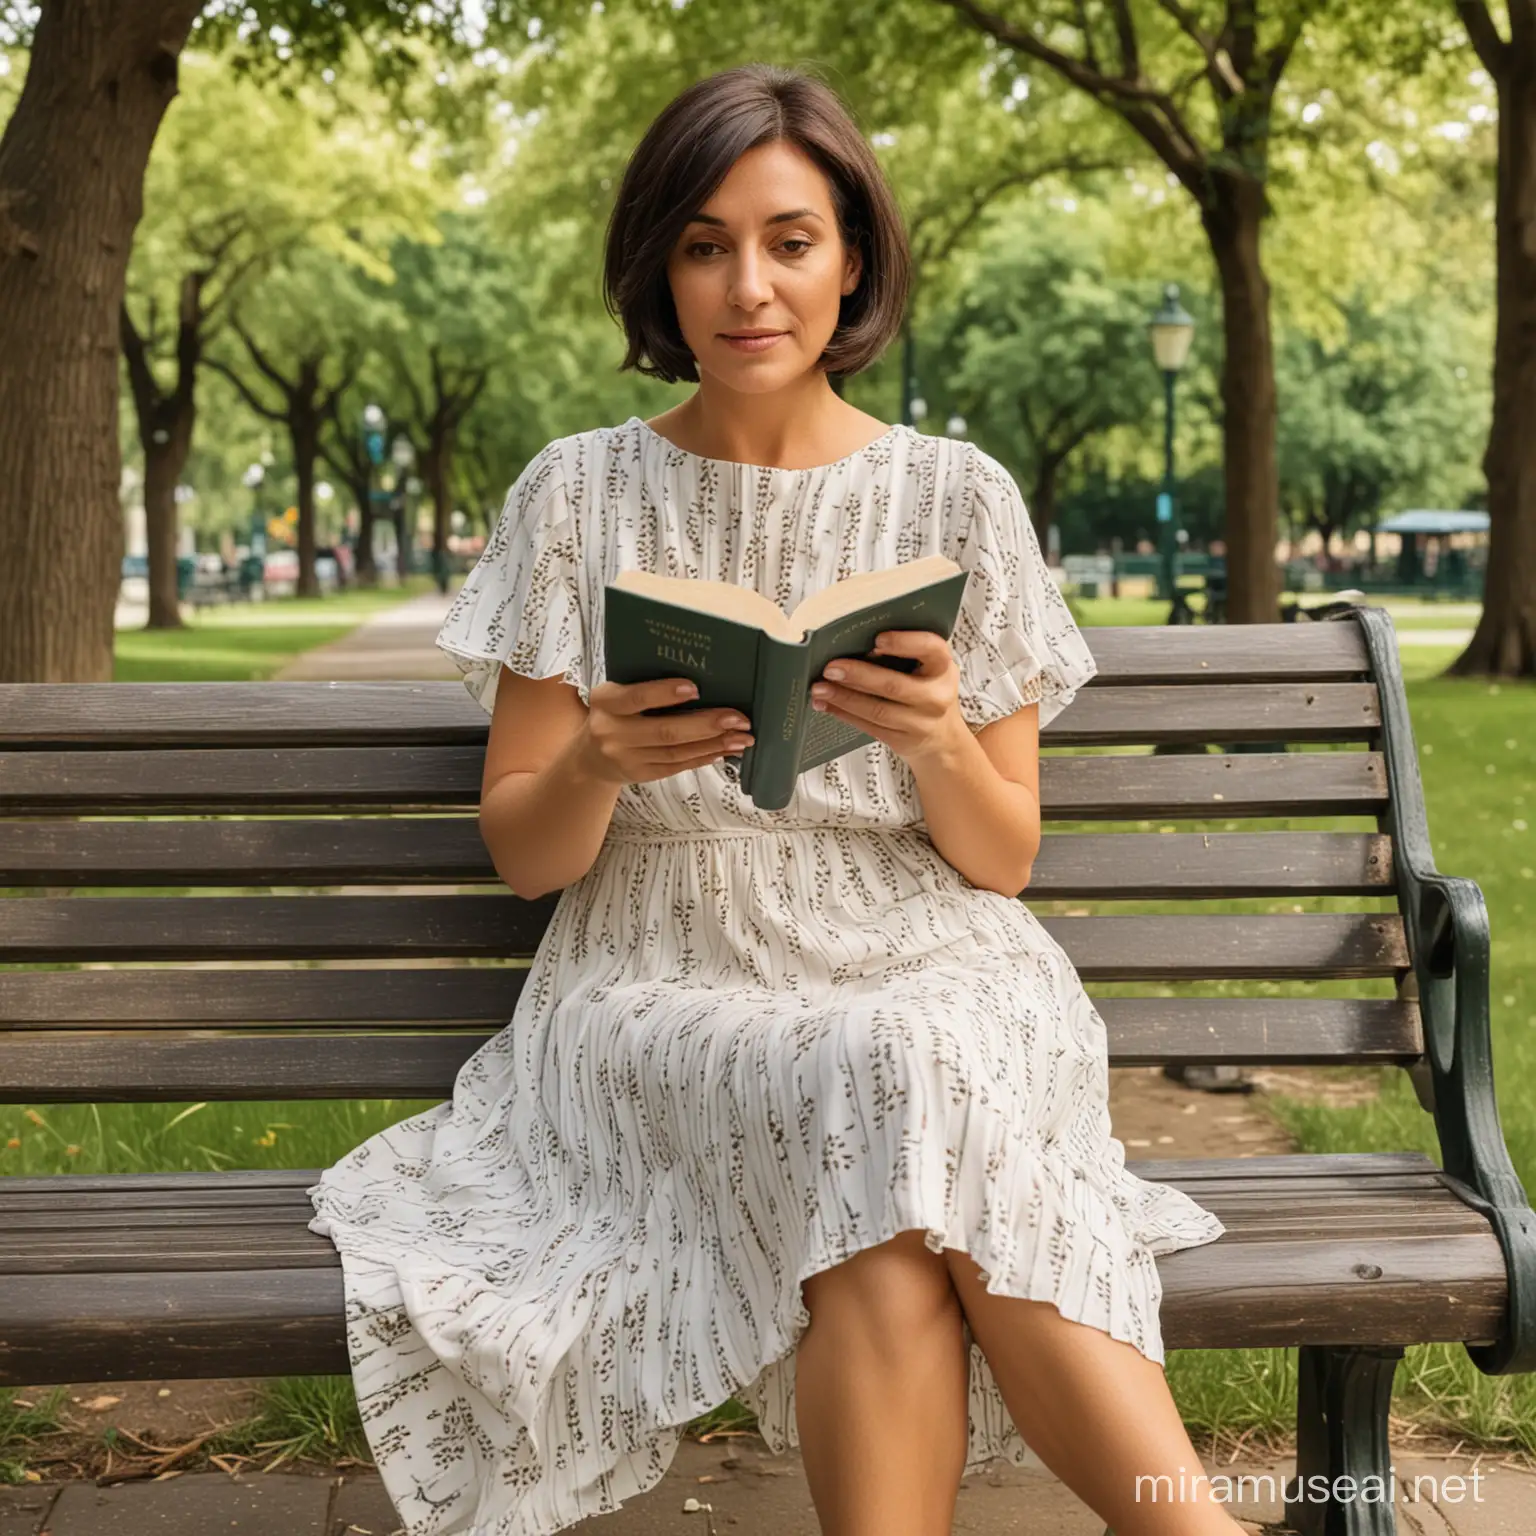 Serene Greek Ethnicity Woman Reading Book on Park Bench